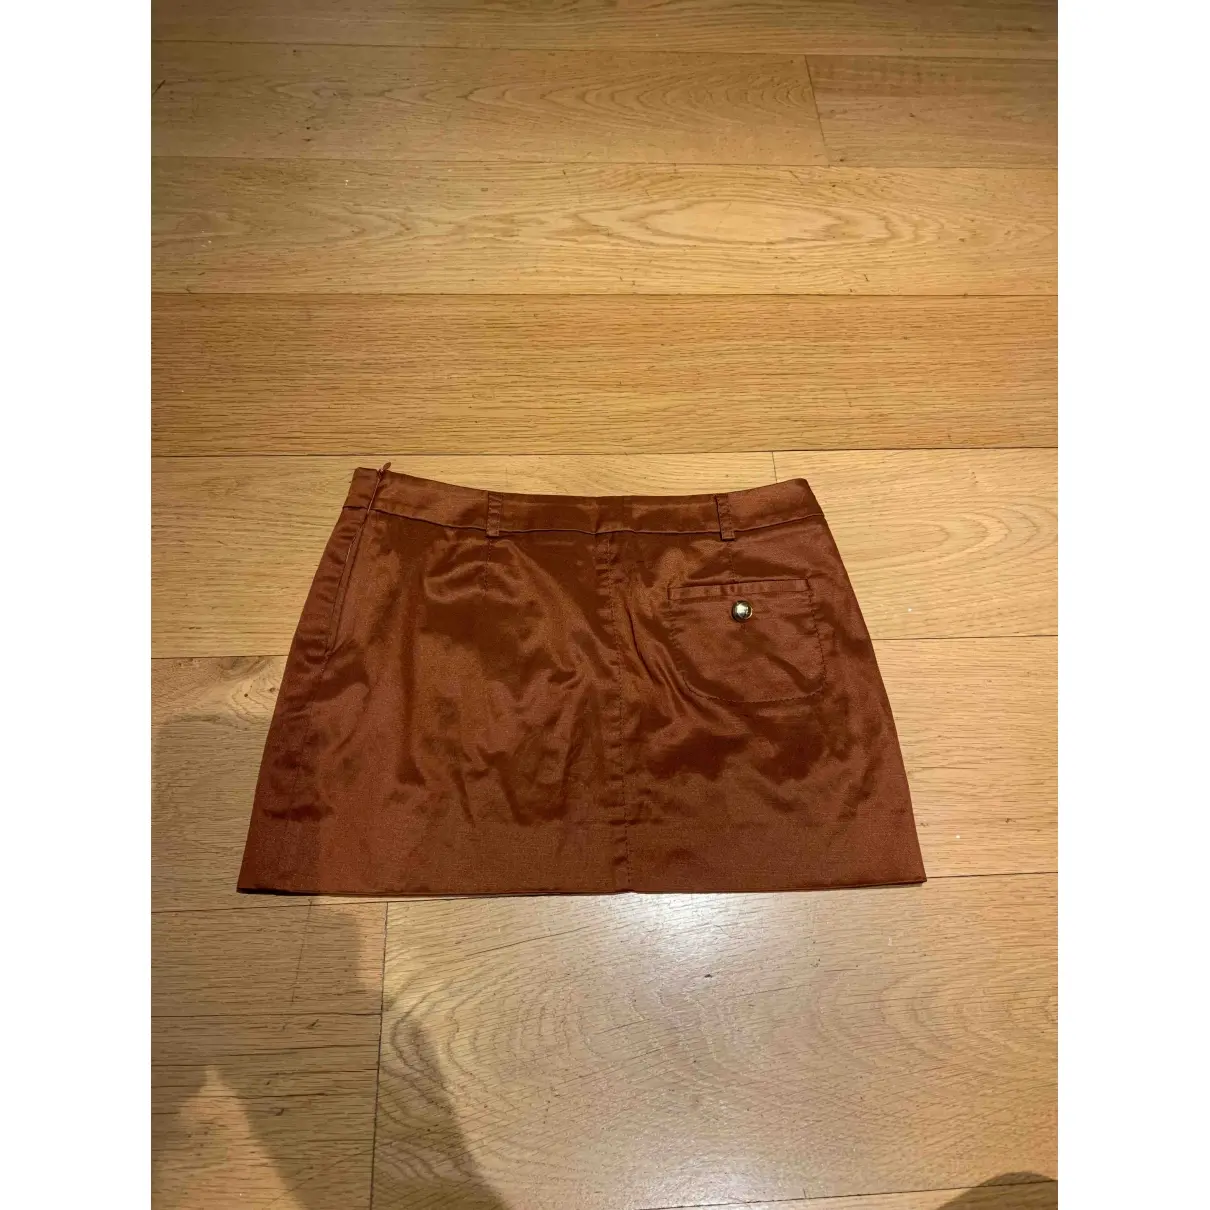 Missoni Mini skirt for sale